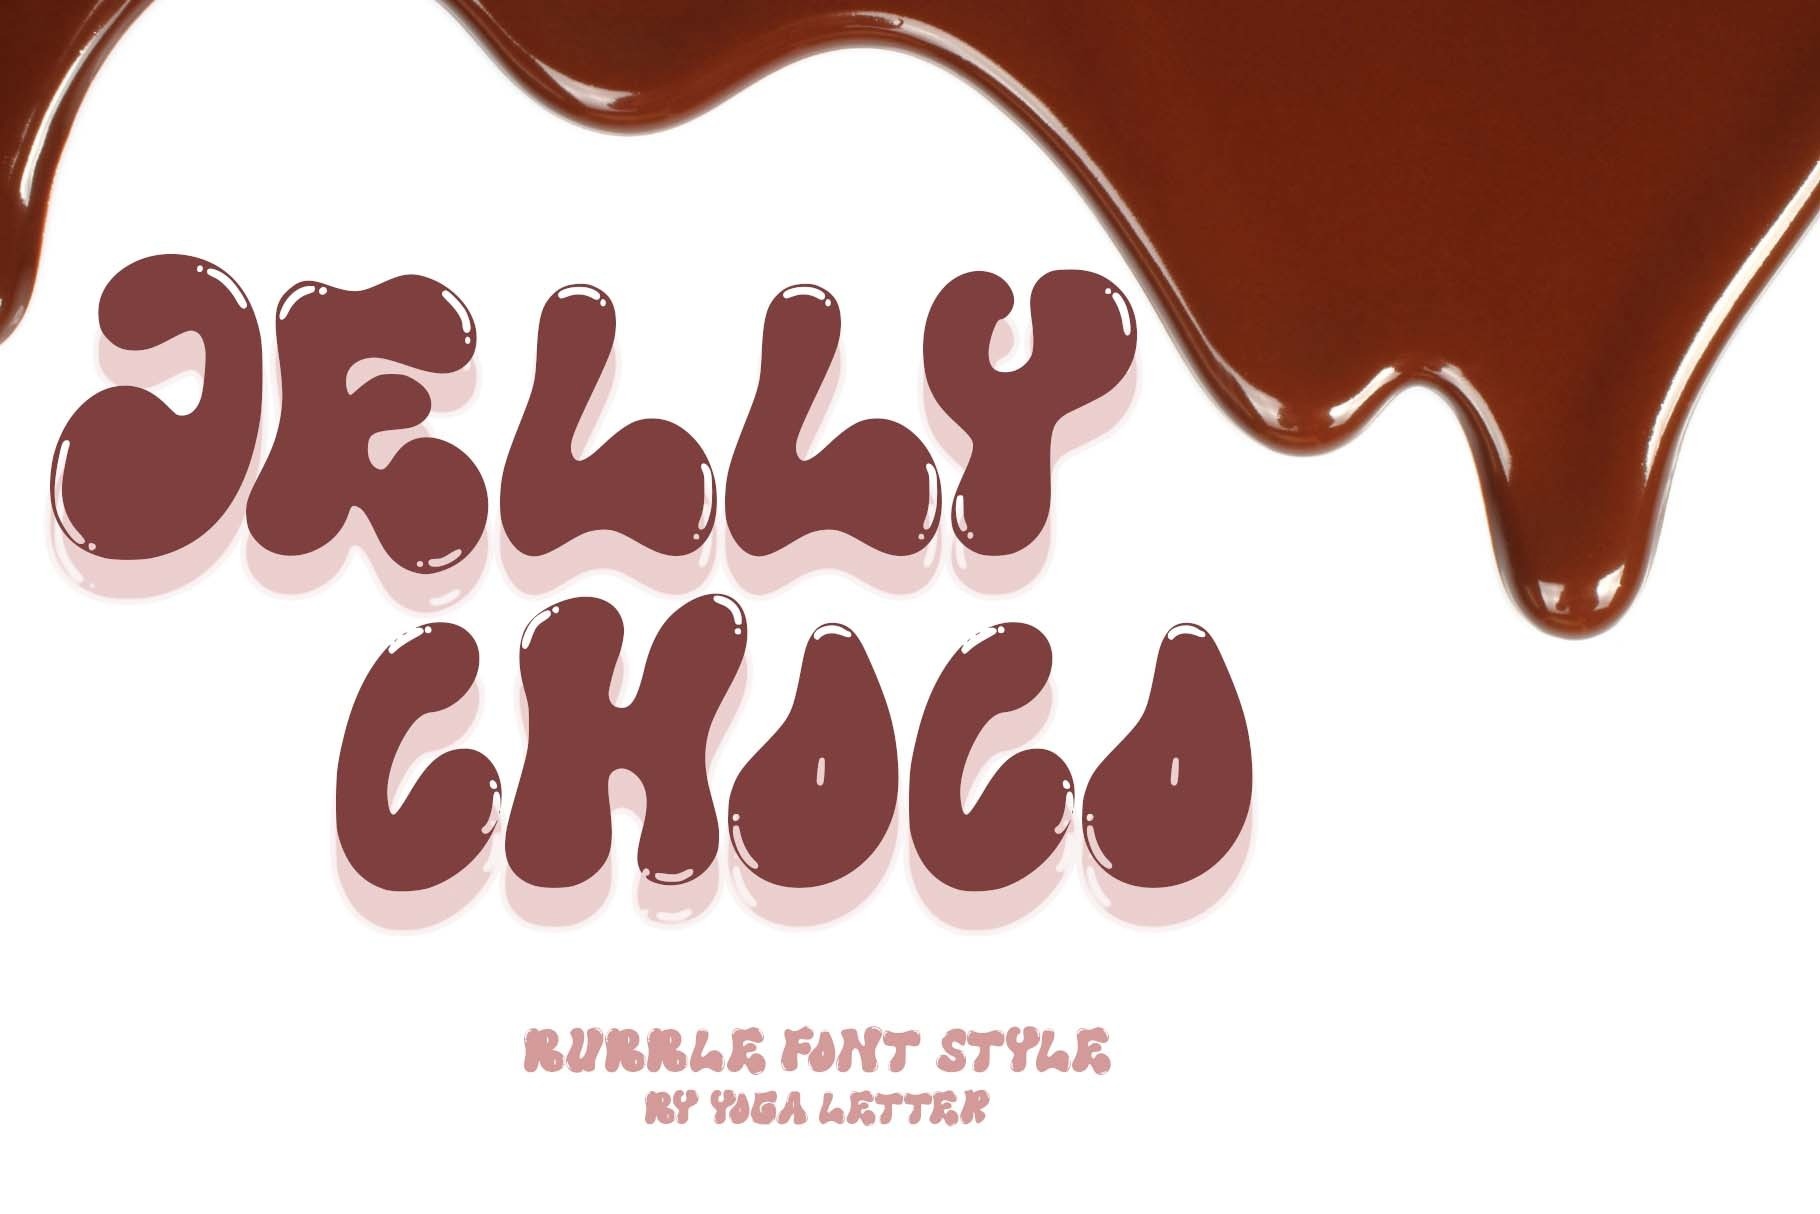 Font Jelly Choco